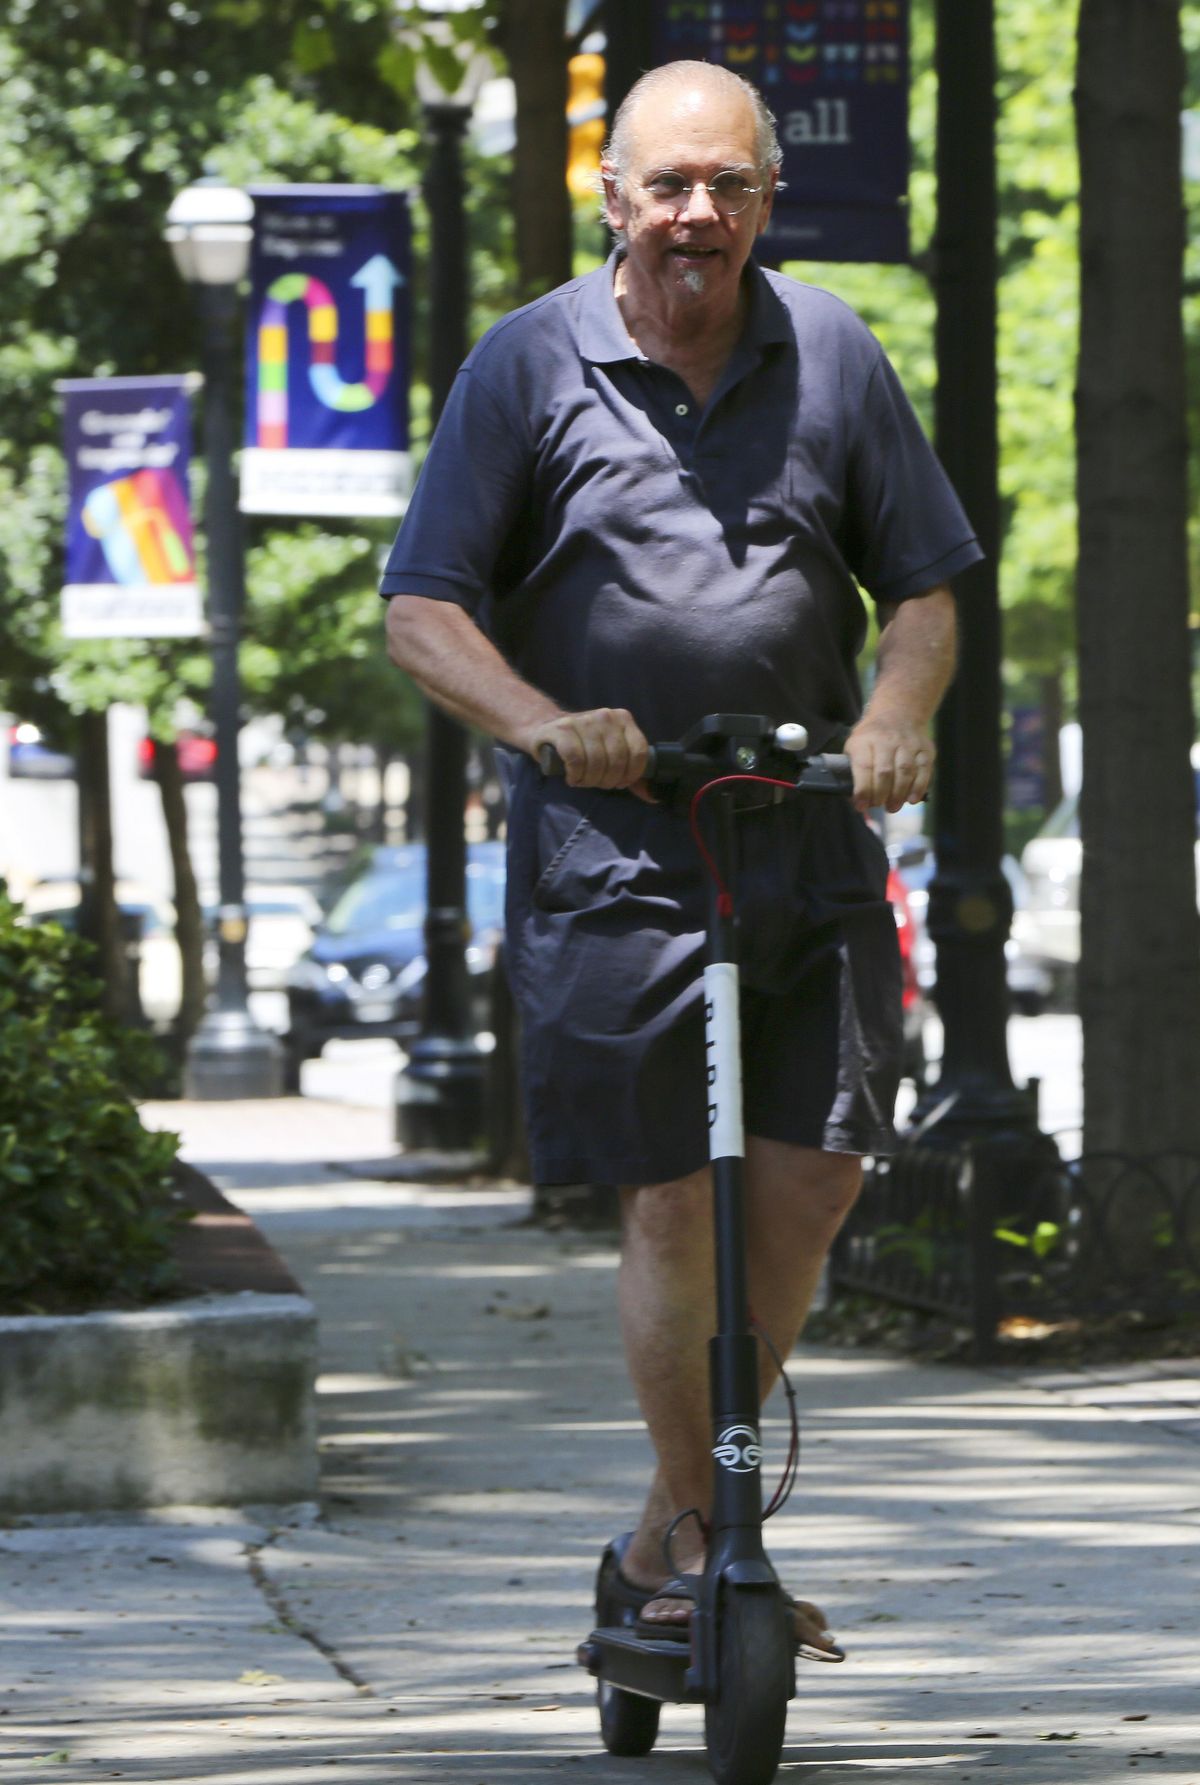 Robert Lowe, 71, rides an electric scooter in Atlanta this June. (Brinley Hineman / AP)